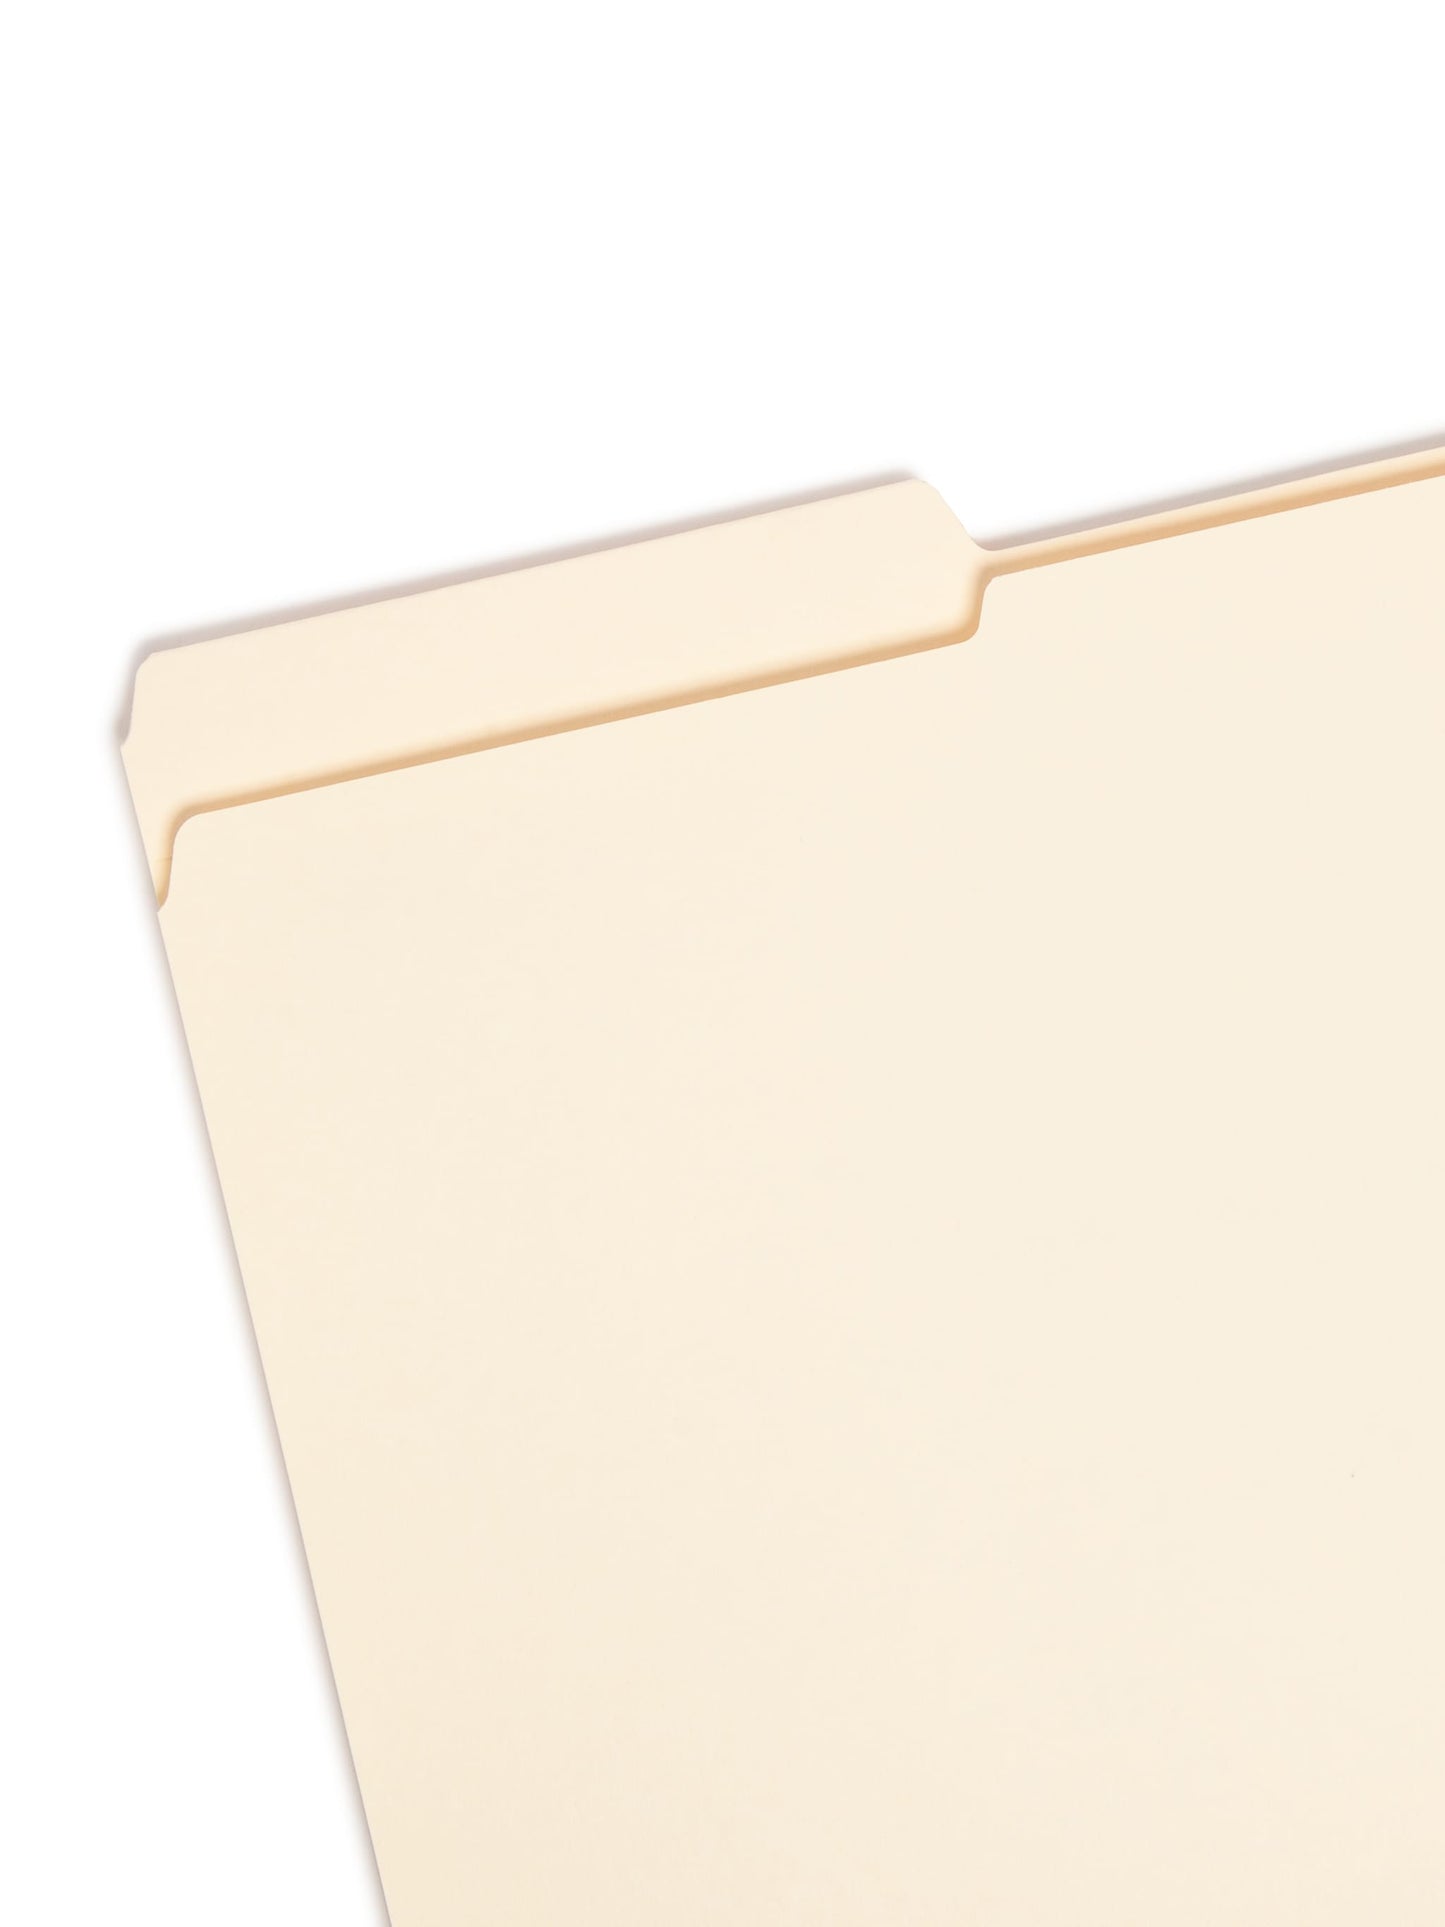 Reinforced Tab File Folders, 1/3-Cut Tab, Left Position, Manila Color, Legal Size, Set of 100, 086486153355